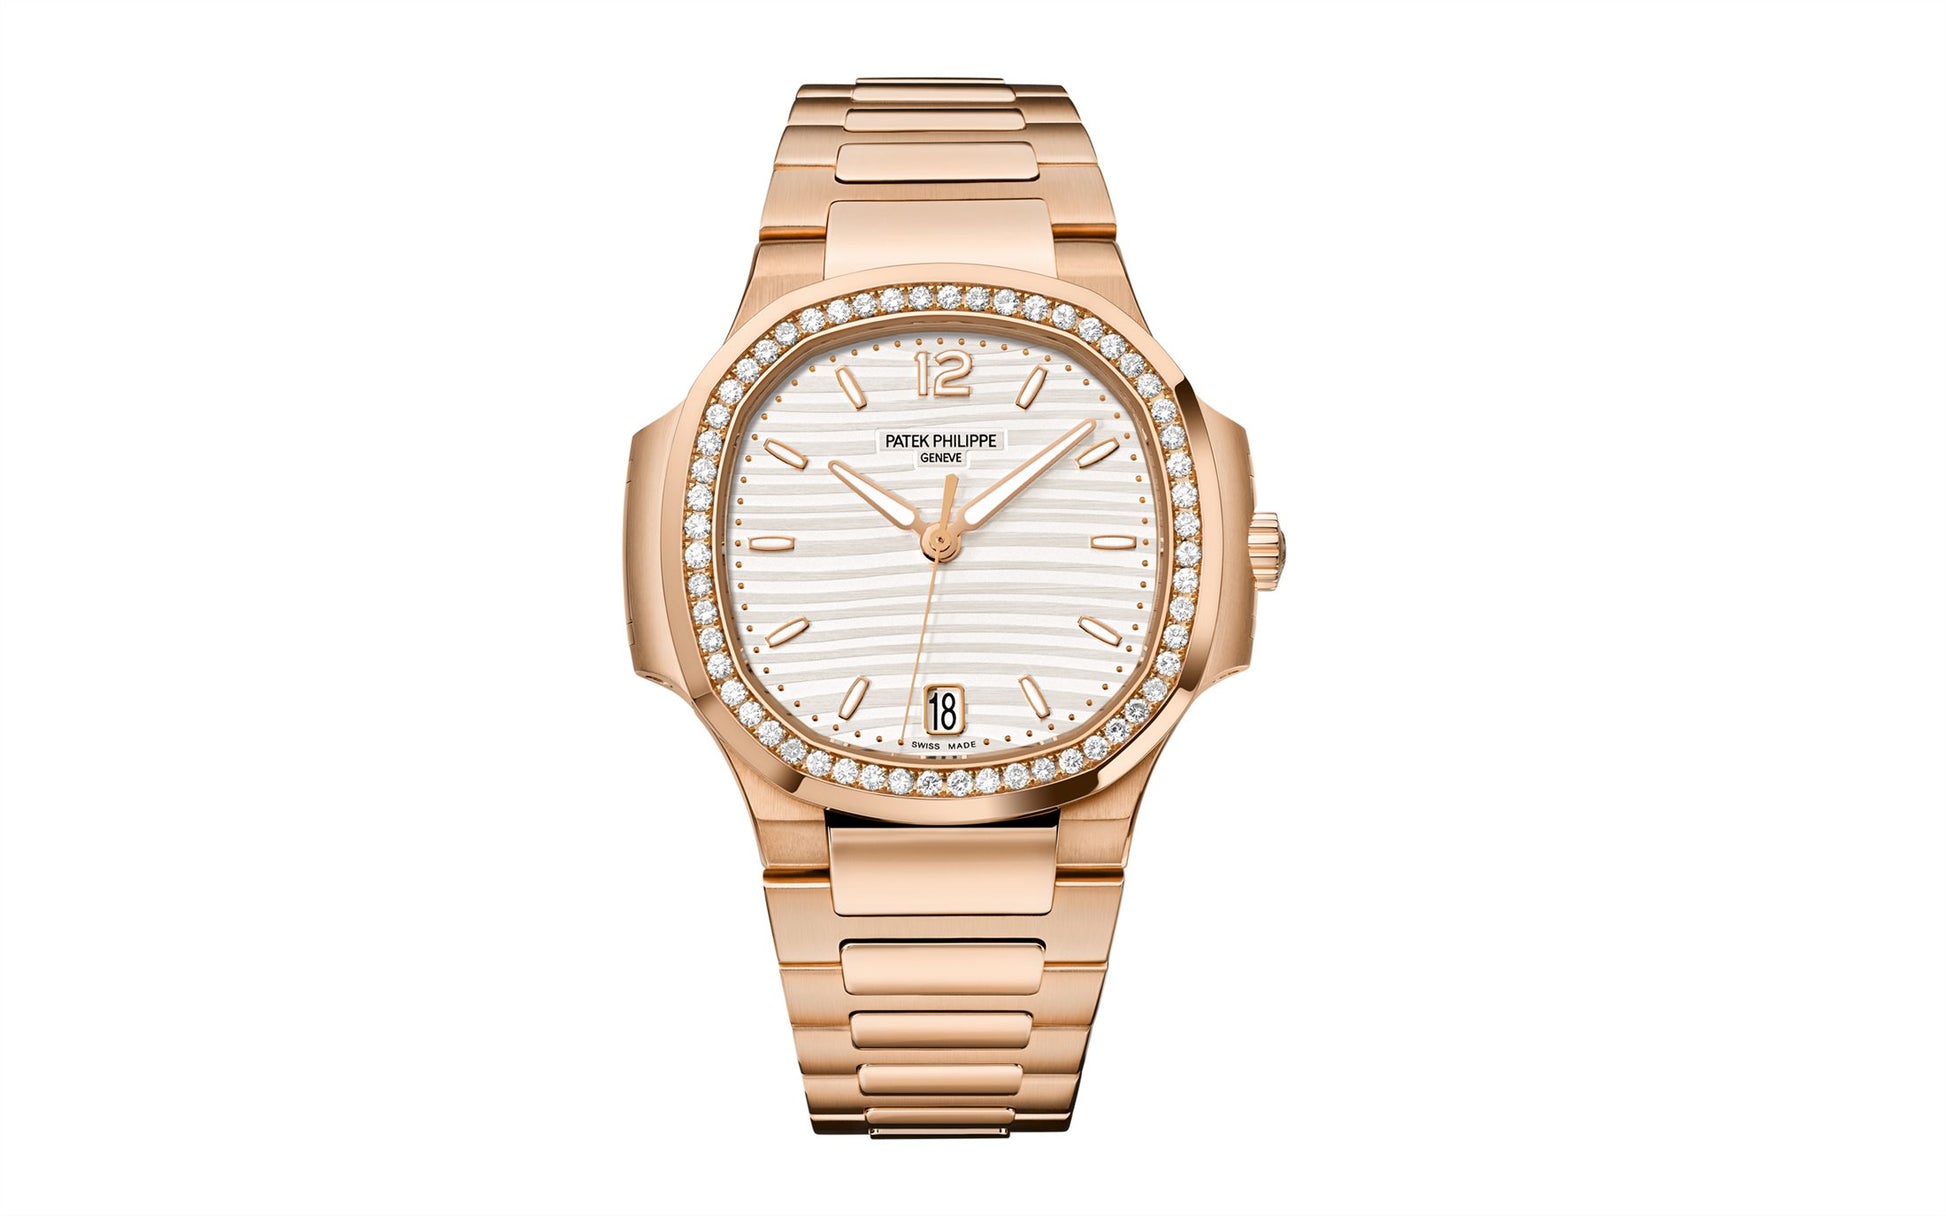 Patek Philippe Nautilus Ladies Automatic Watch, 18k Rose Gold and Diamonds, 35,2mm, Ref# 7118/1200R-001, 1